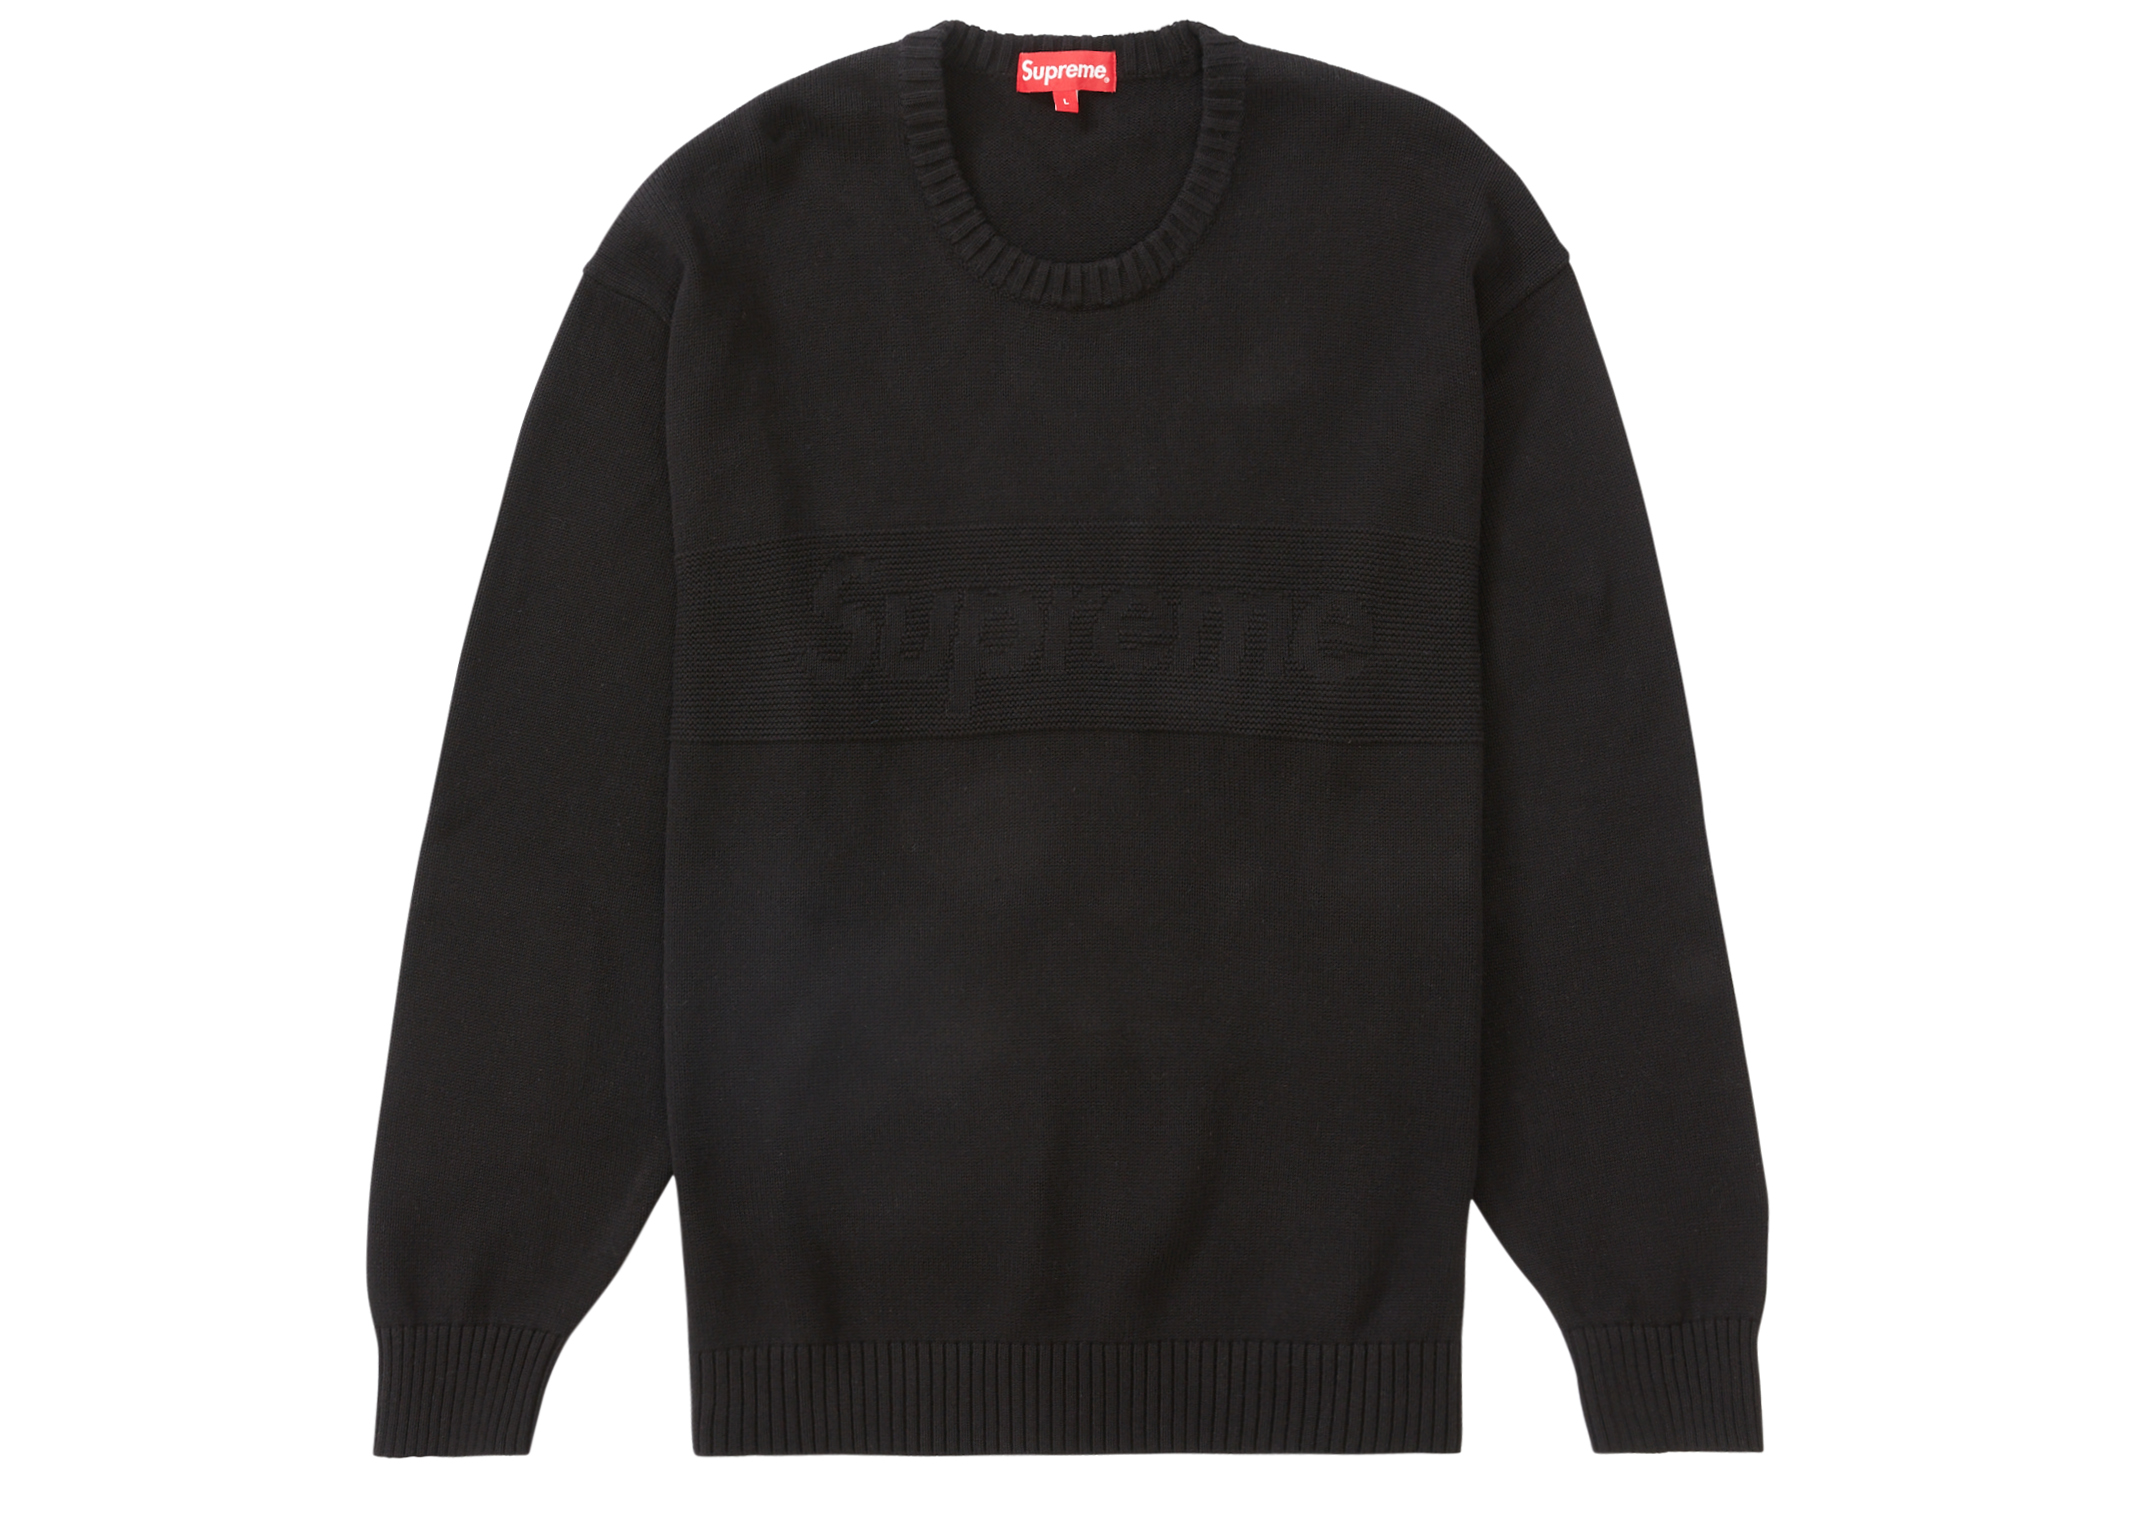 Supreme Tonal Paneled Sweater Black Men's - SS22 - US